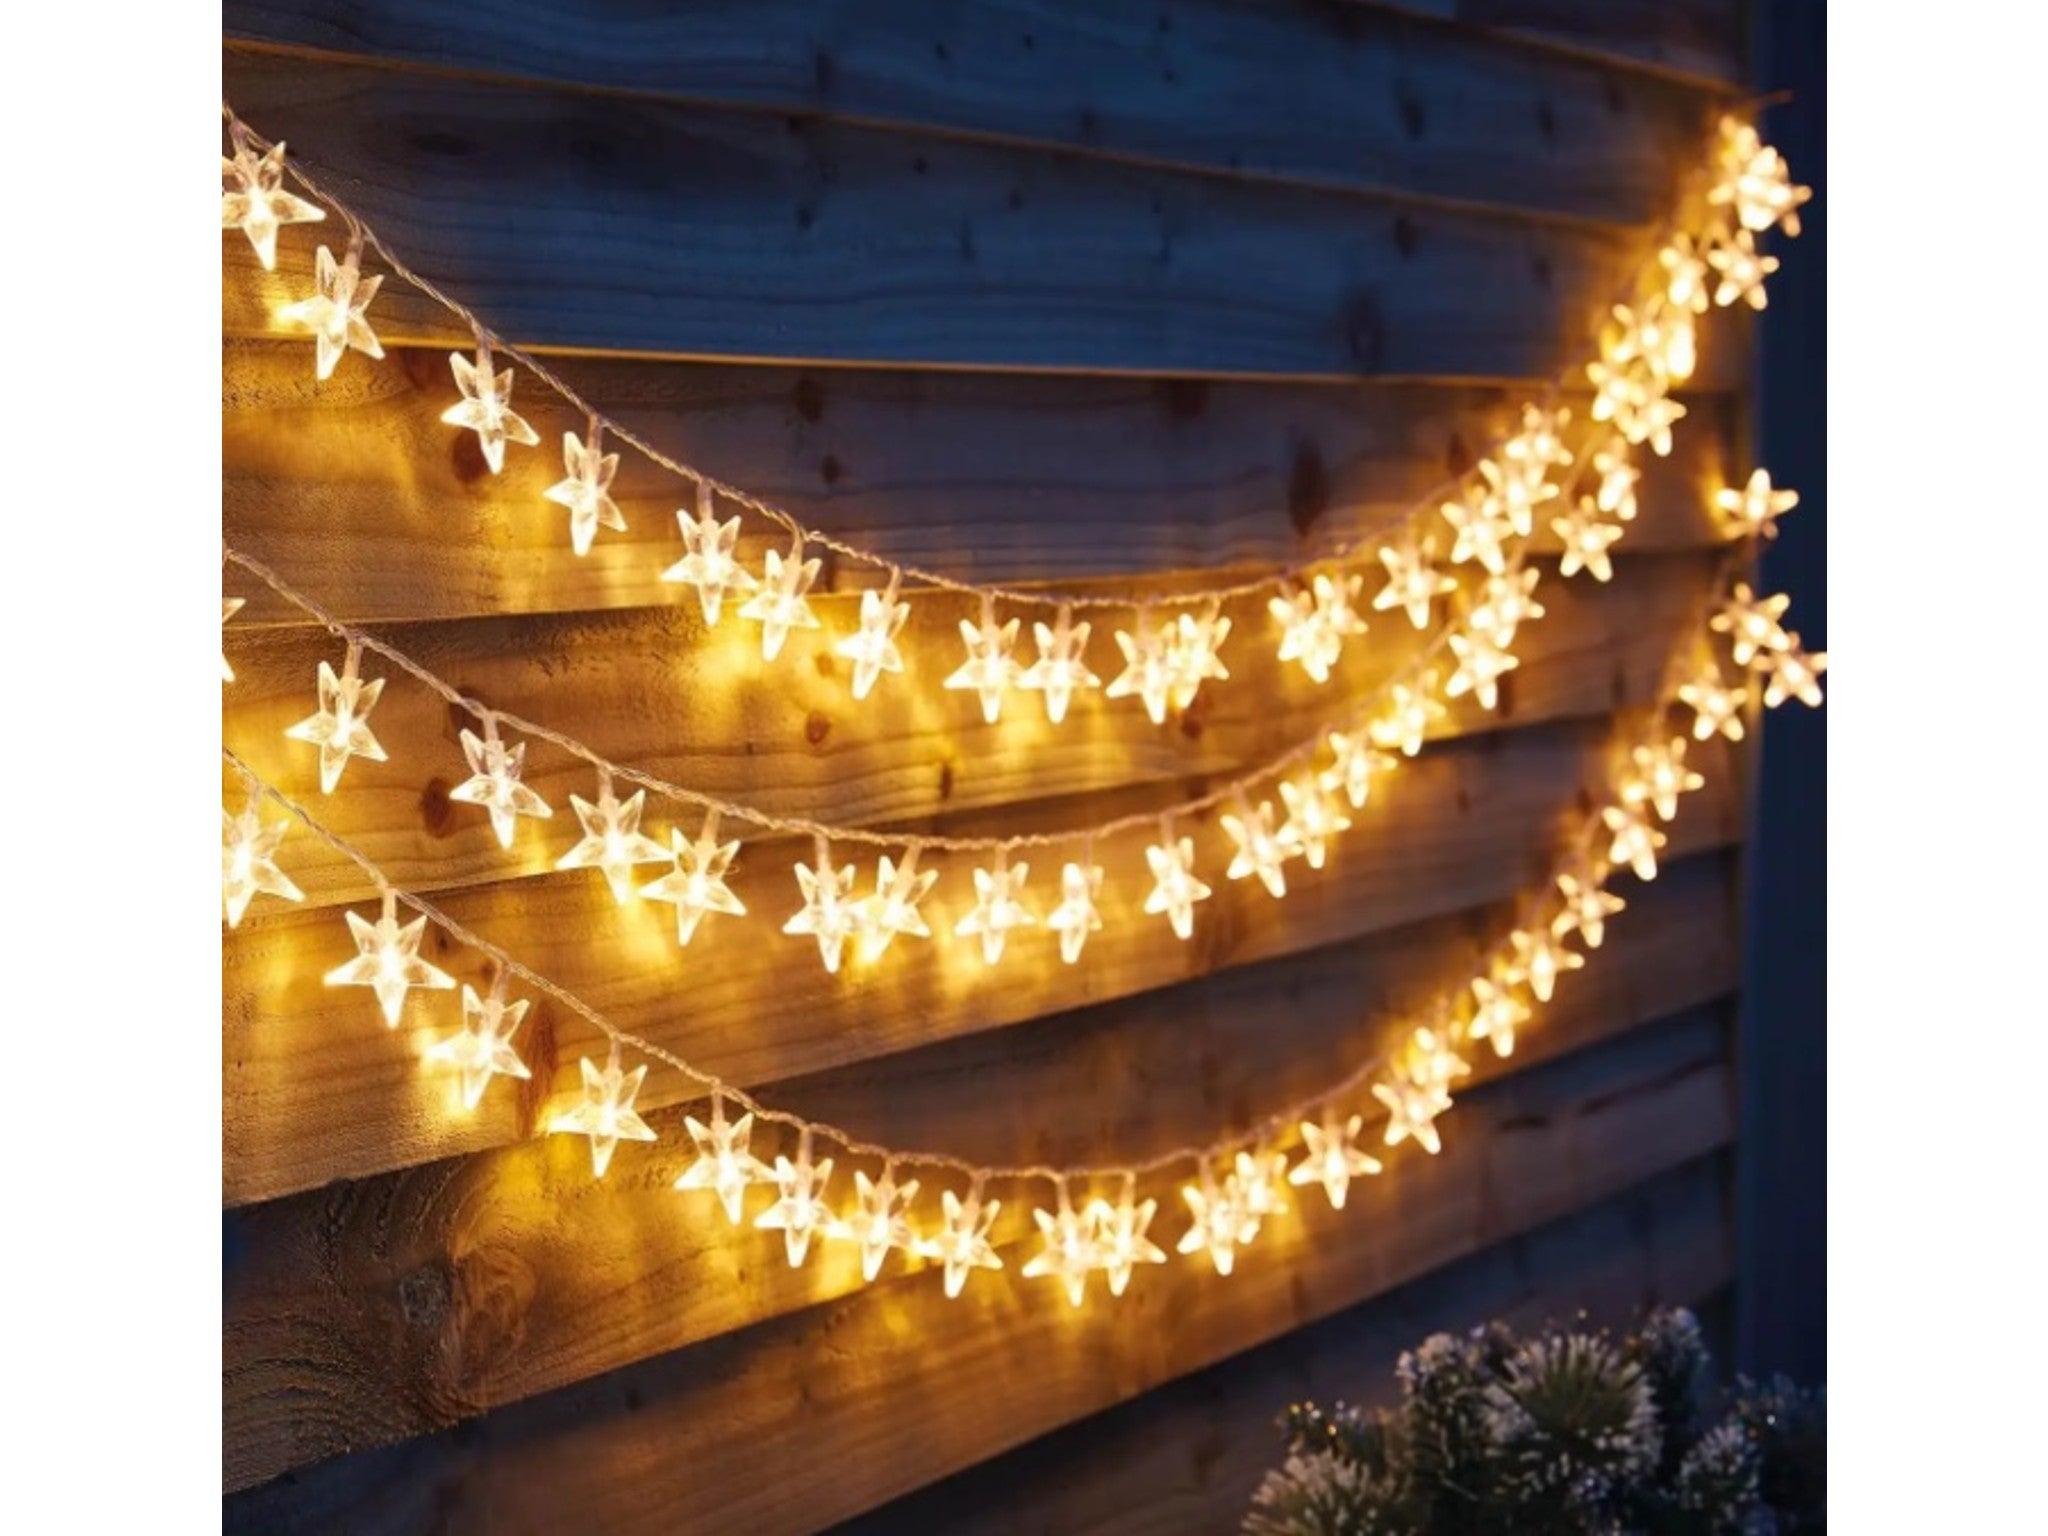 Best outdoor Christmas lights UK 18 LED string lights and ...